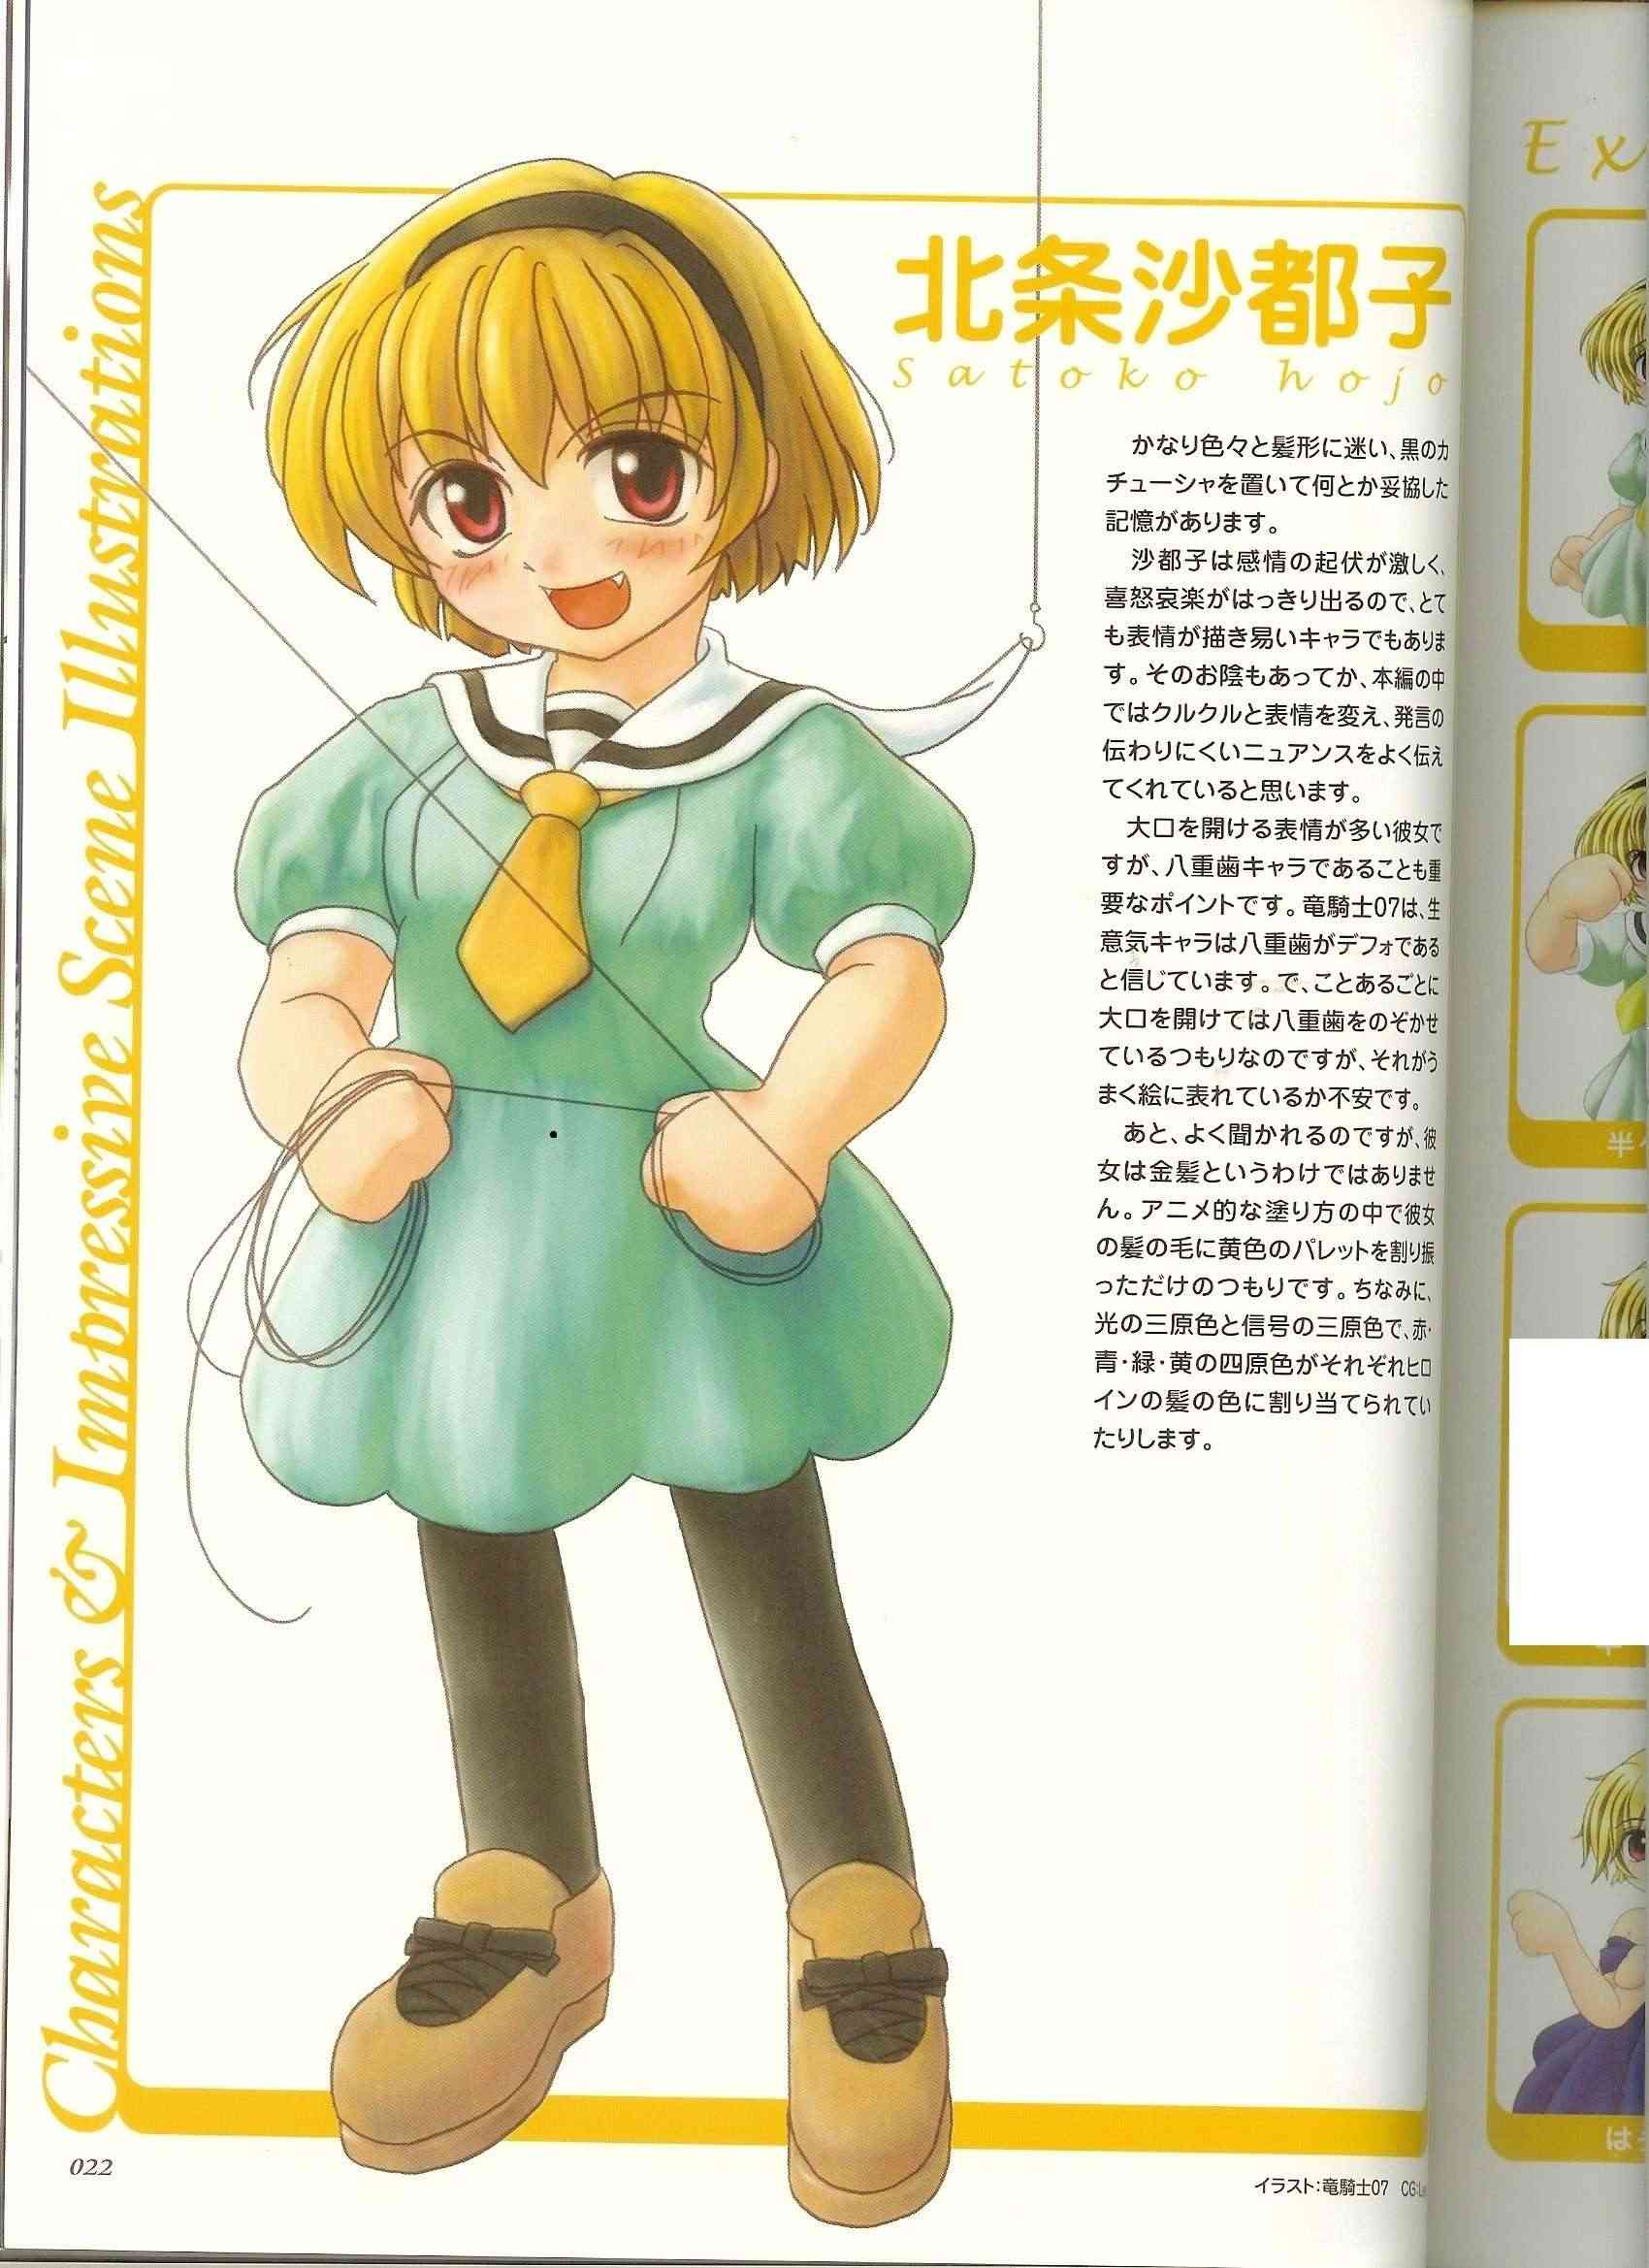 Higurashi No naku Koro Ni - Official Character Guide Satoko10